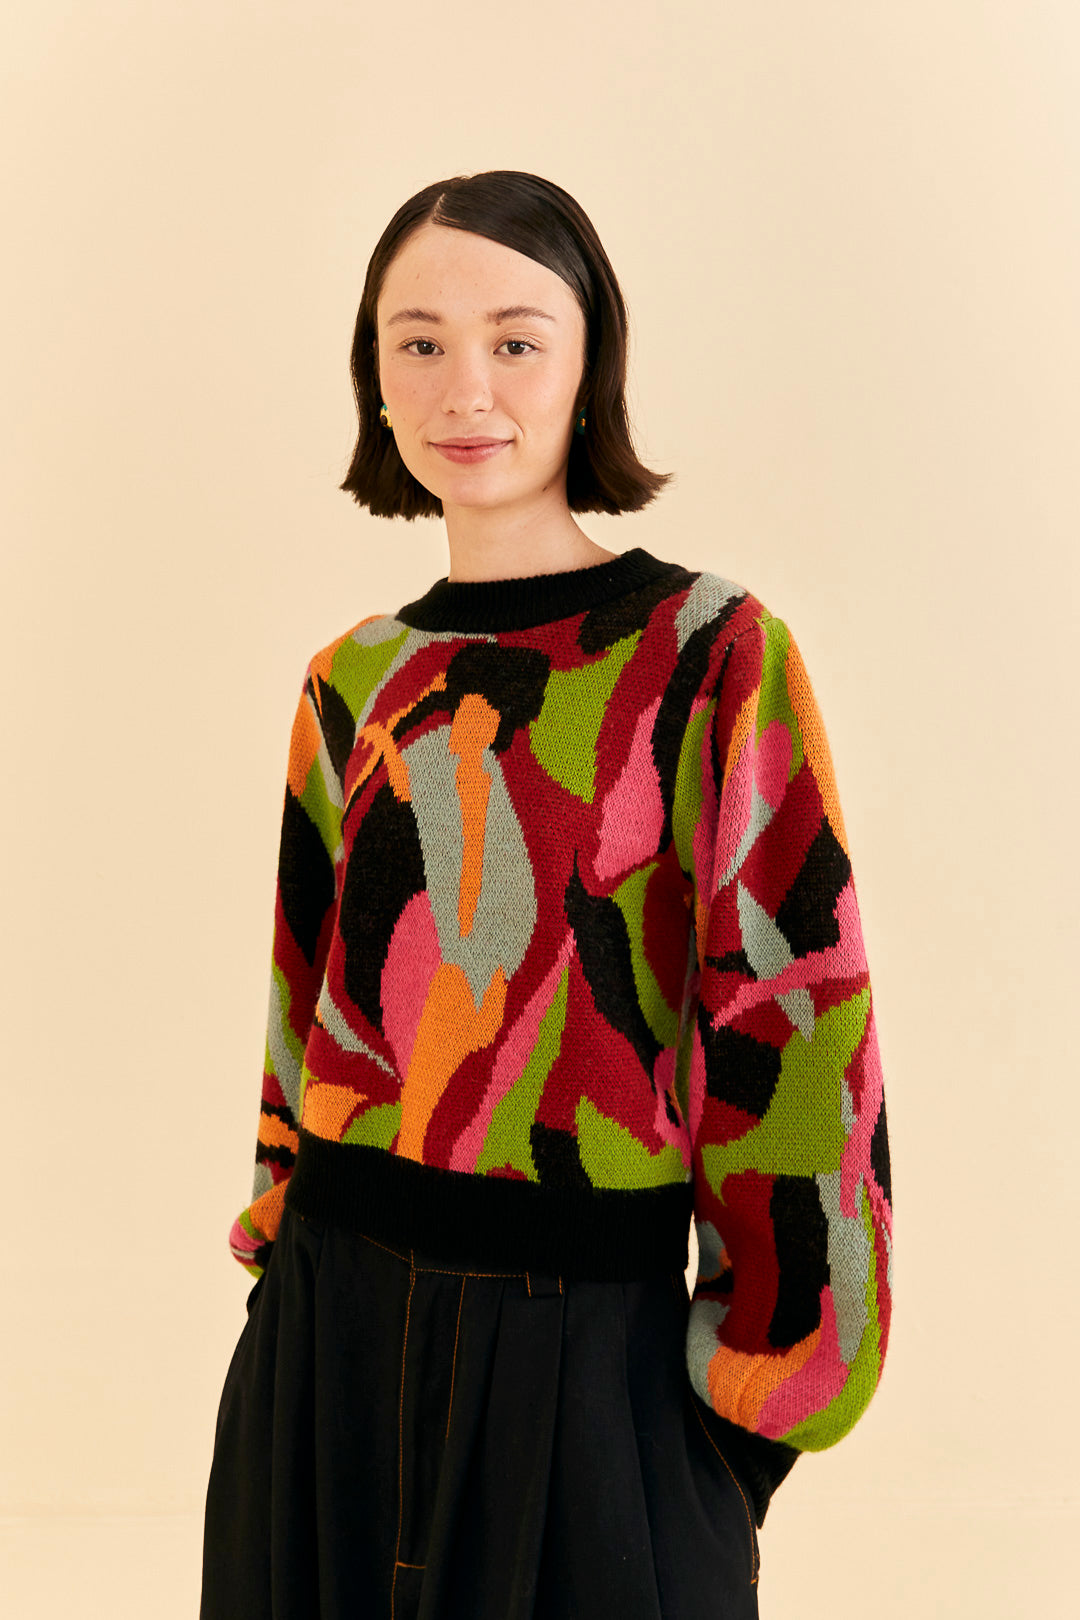 The Dance Multicolor Knit Sweater